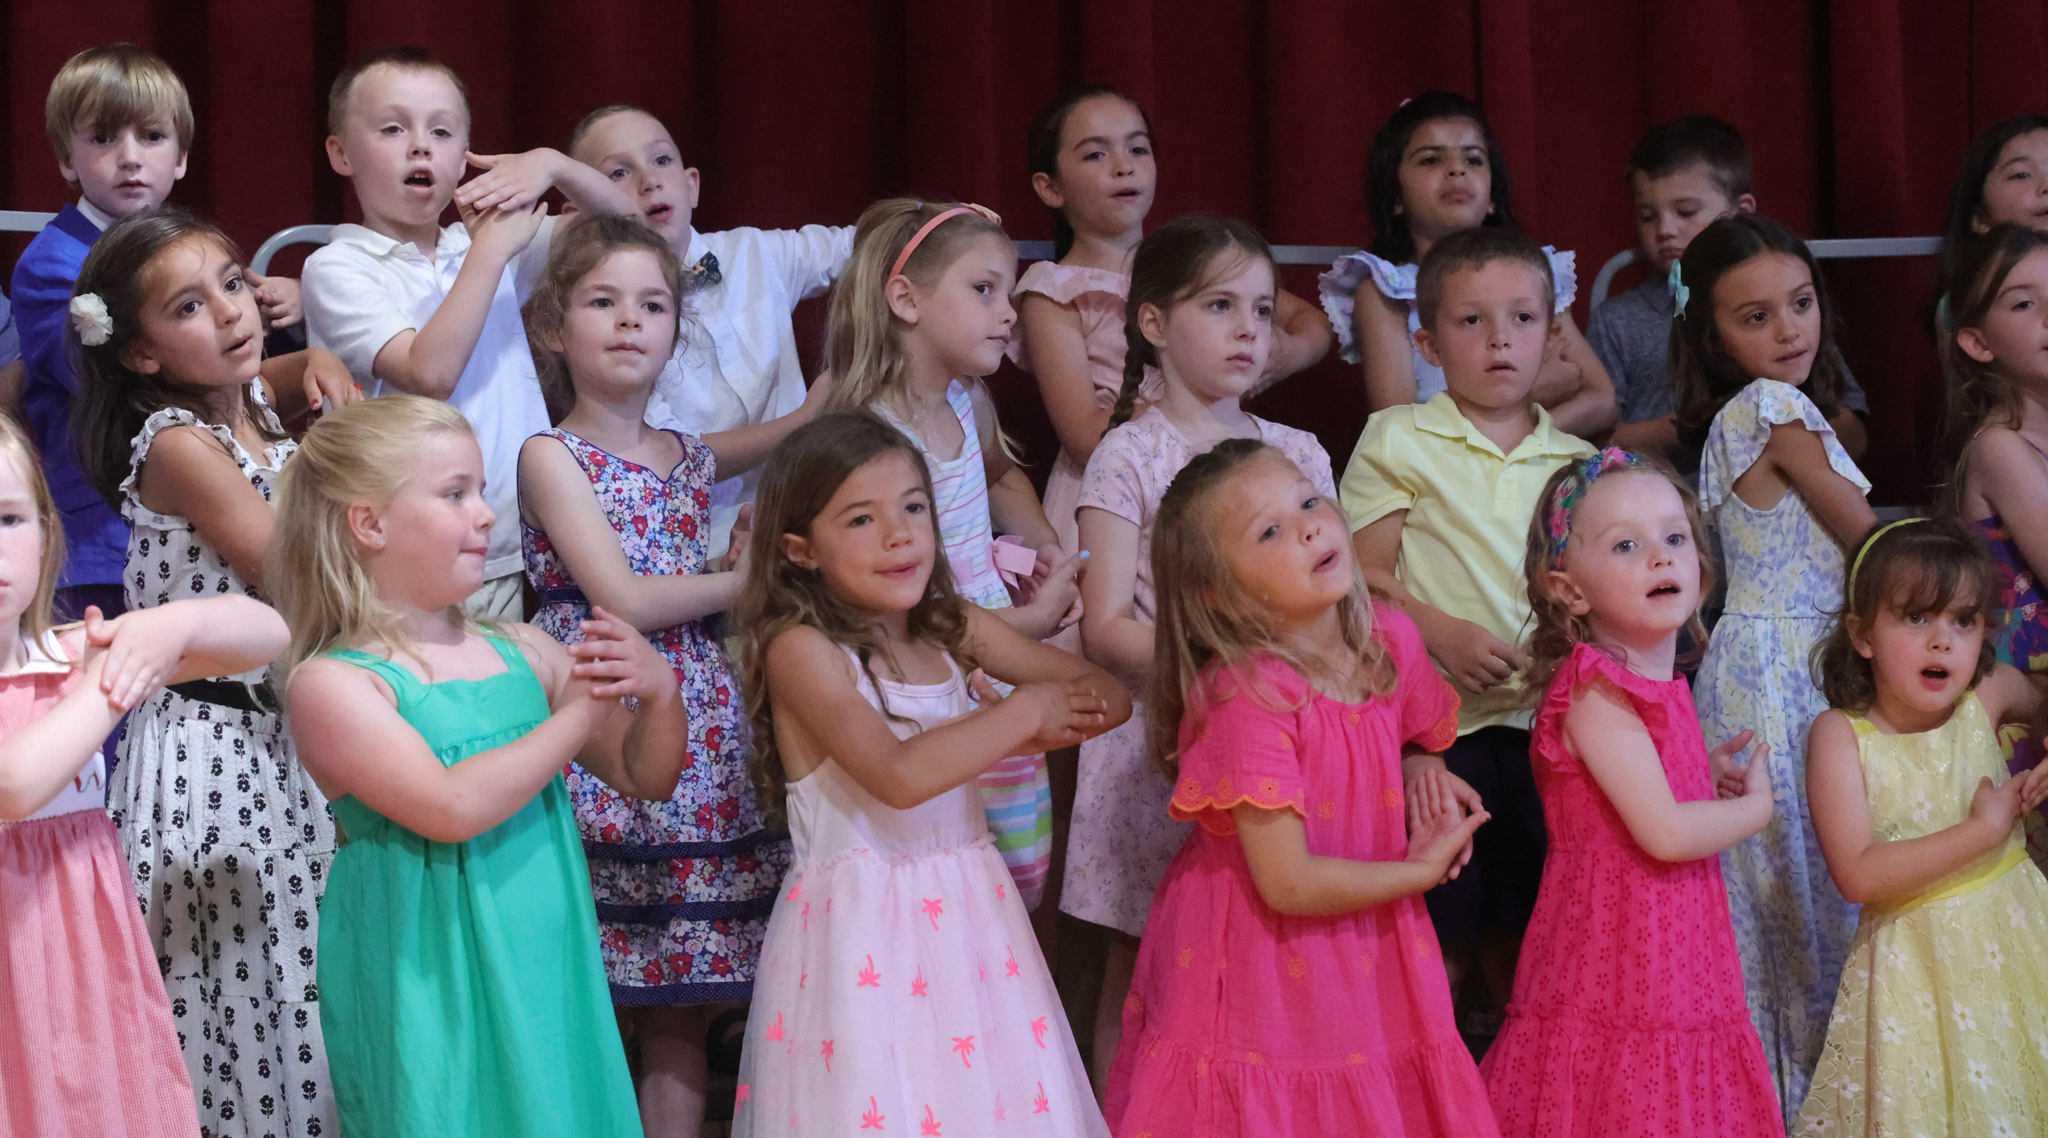 Group of kindergarten children wearing dressy clothes perform on risers during kindergarten graduation.